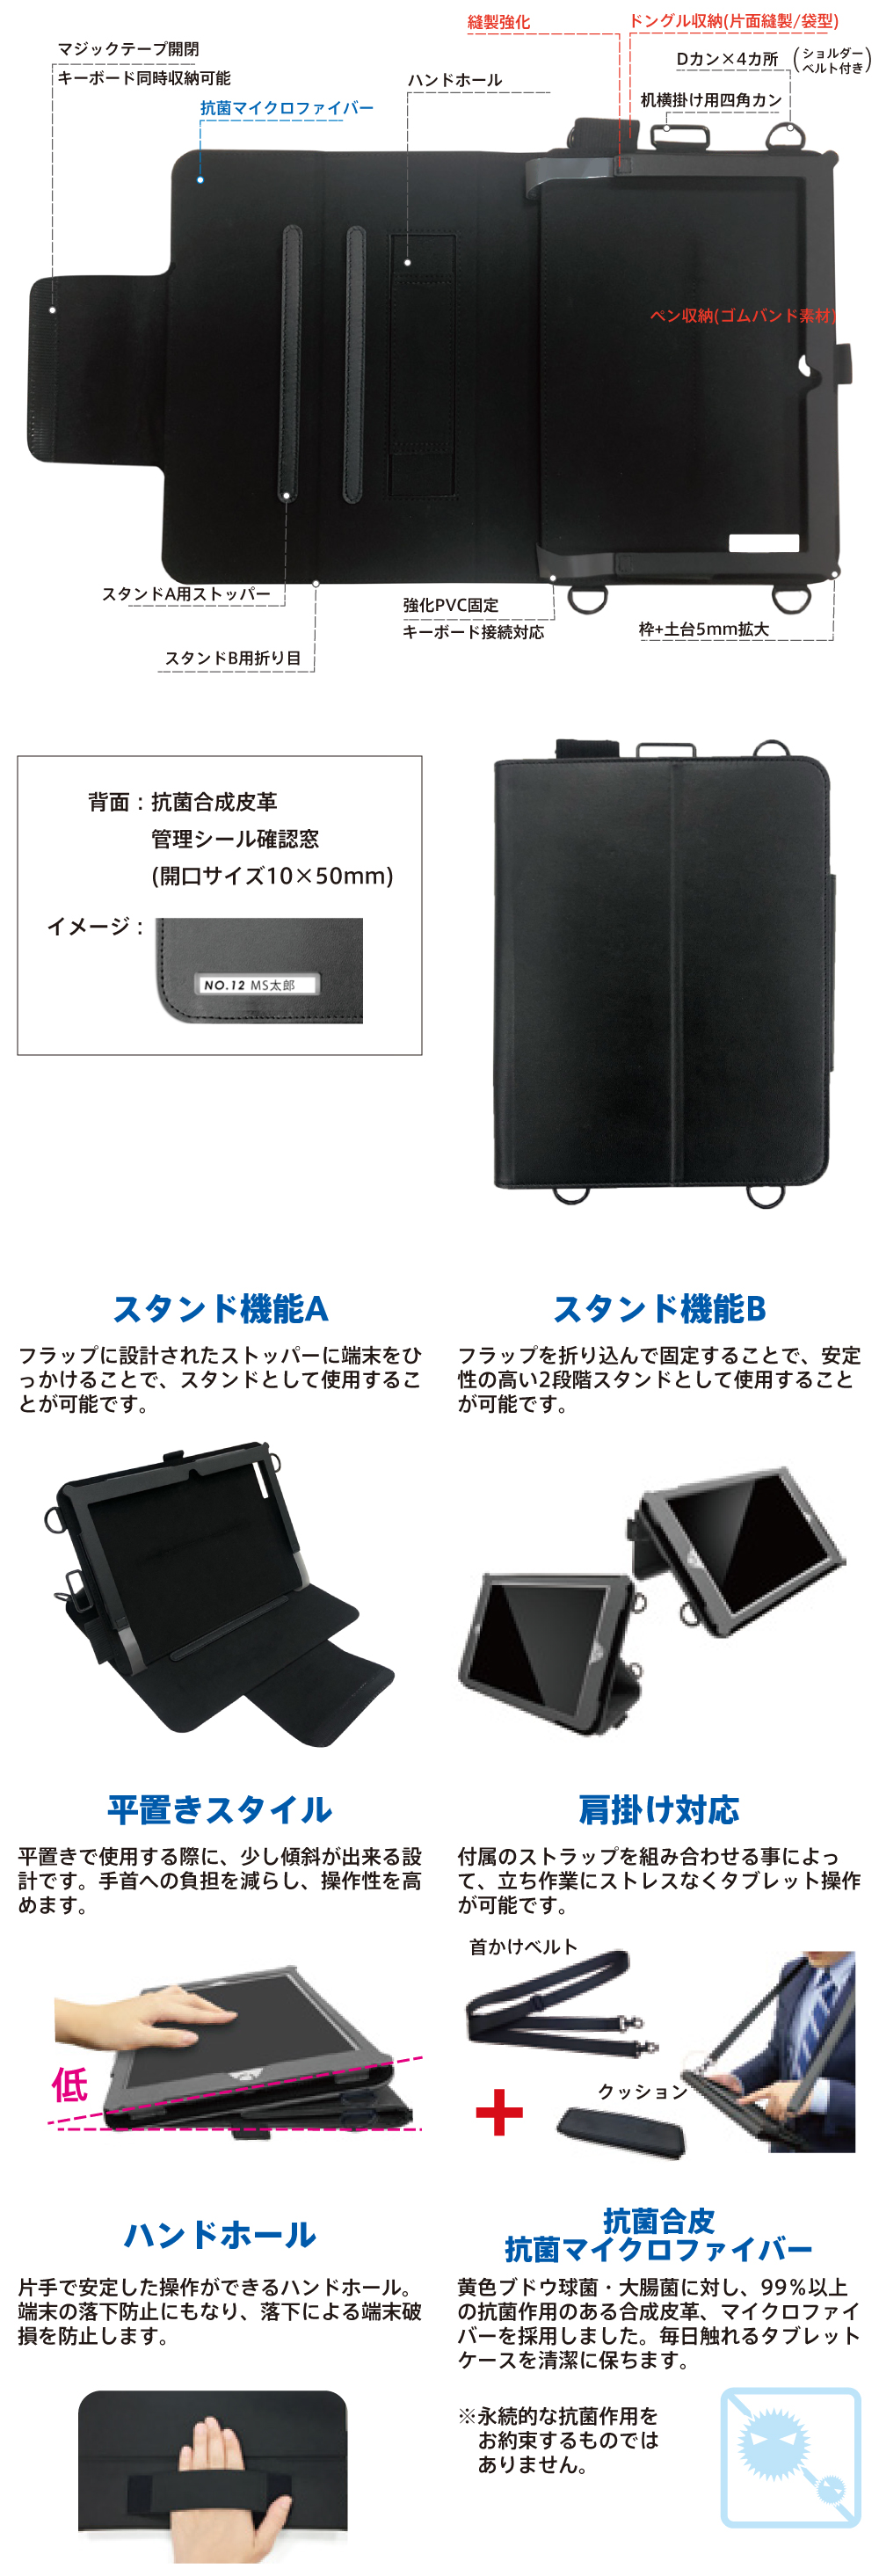 dynabook K50 合成皮革ケース ブラック 製品詳細